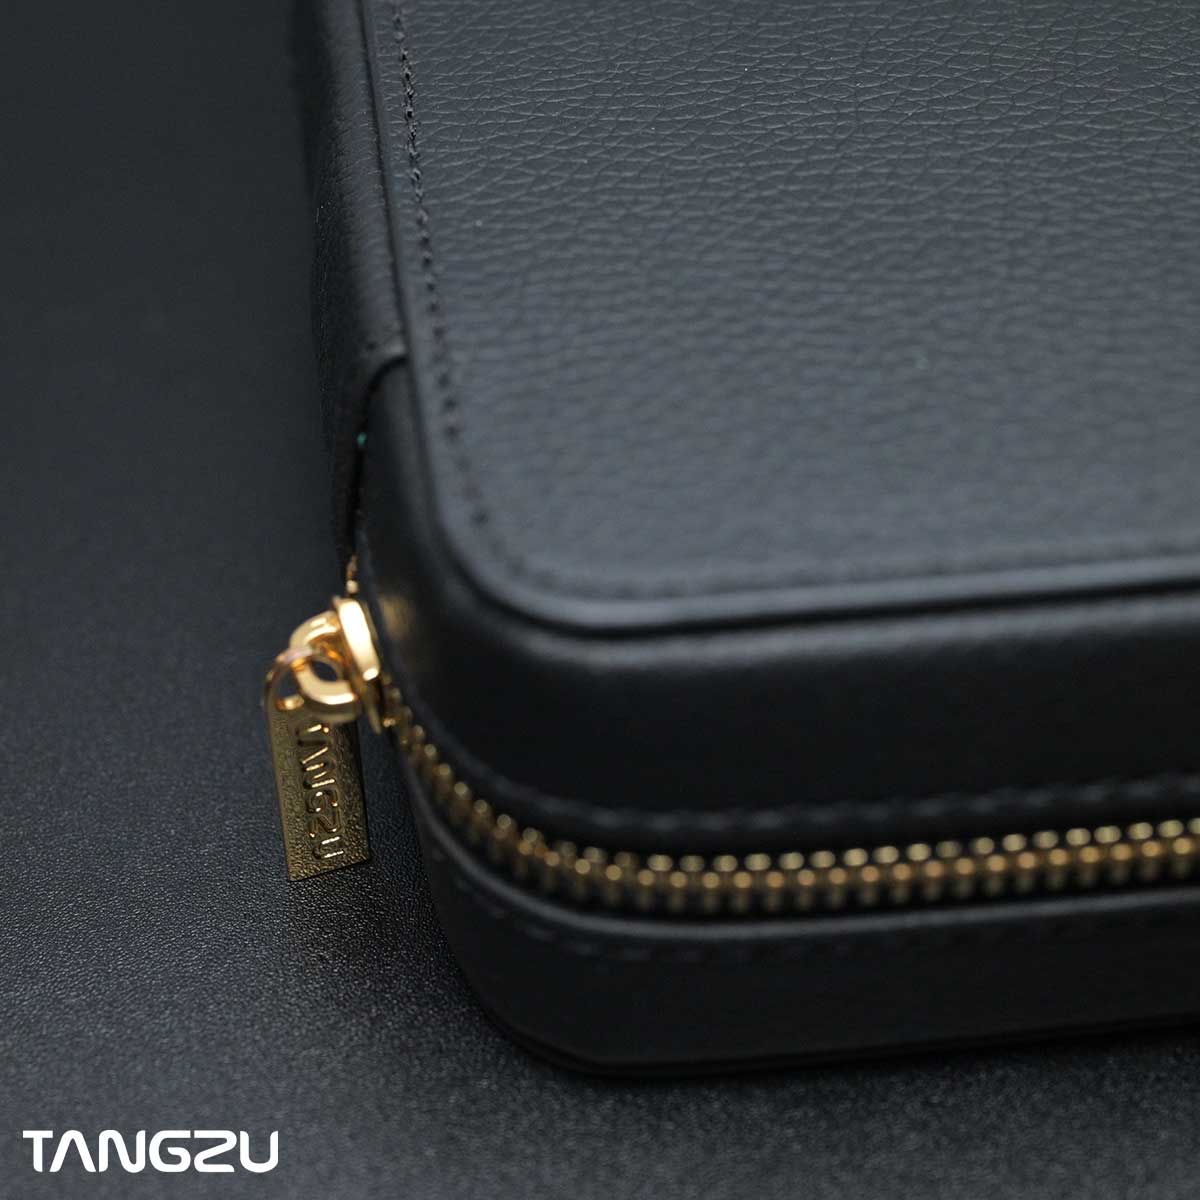 TANGZU Earphone Case HIFI Storage Carrying Case for IEMs Accessories